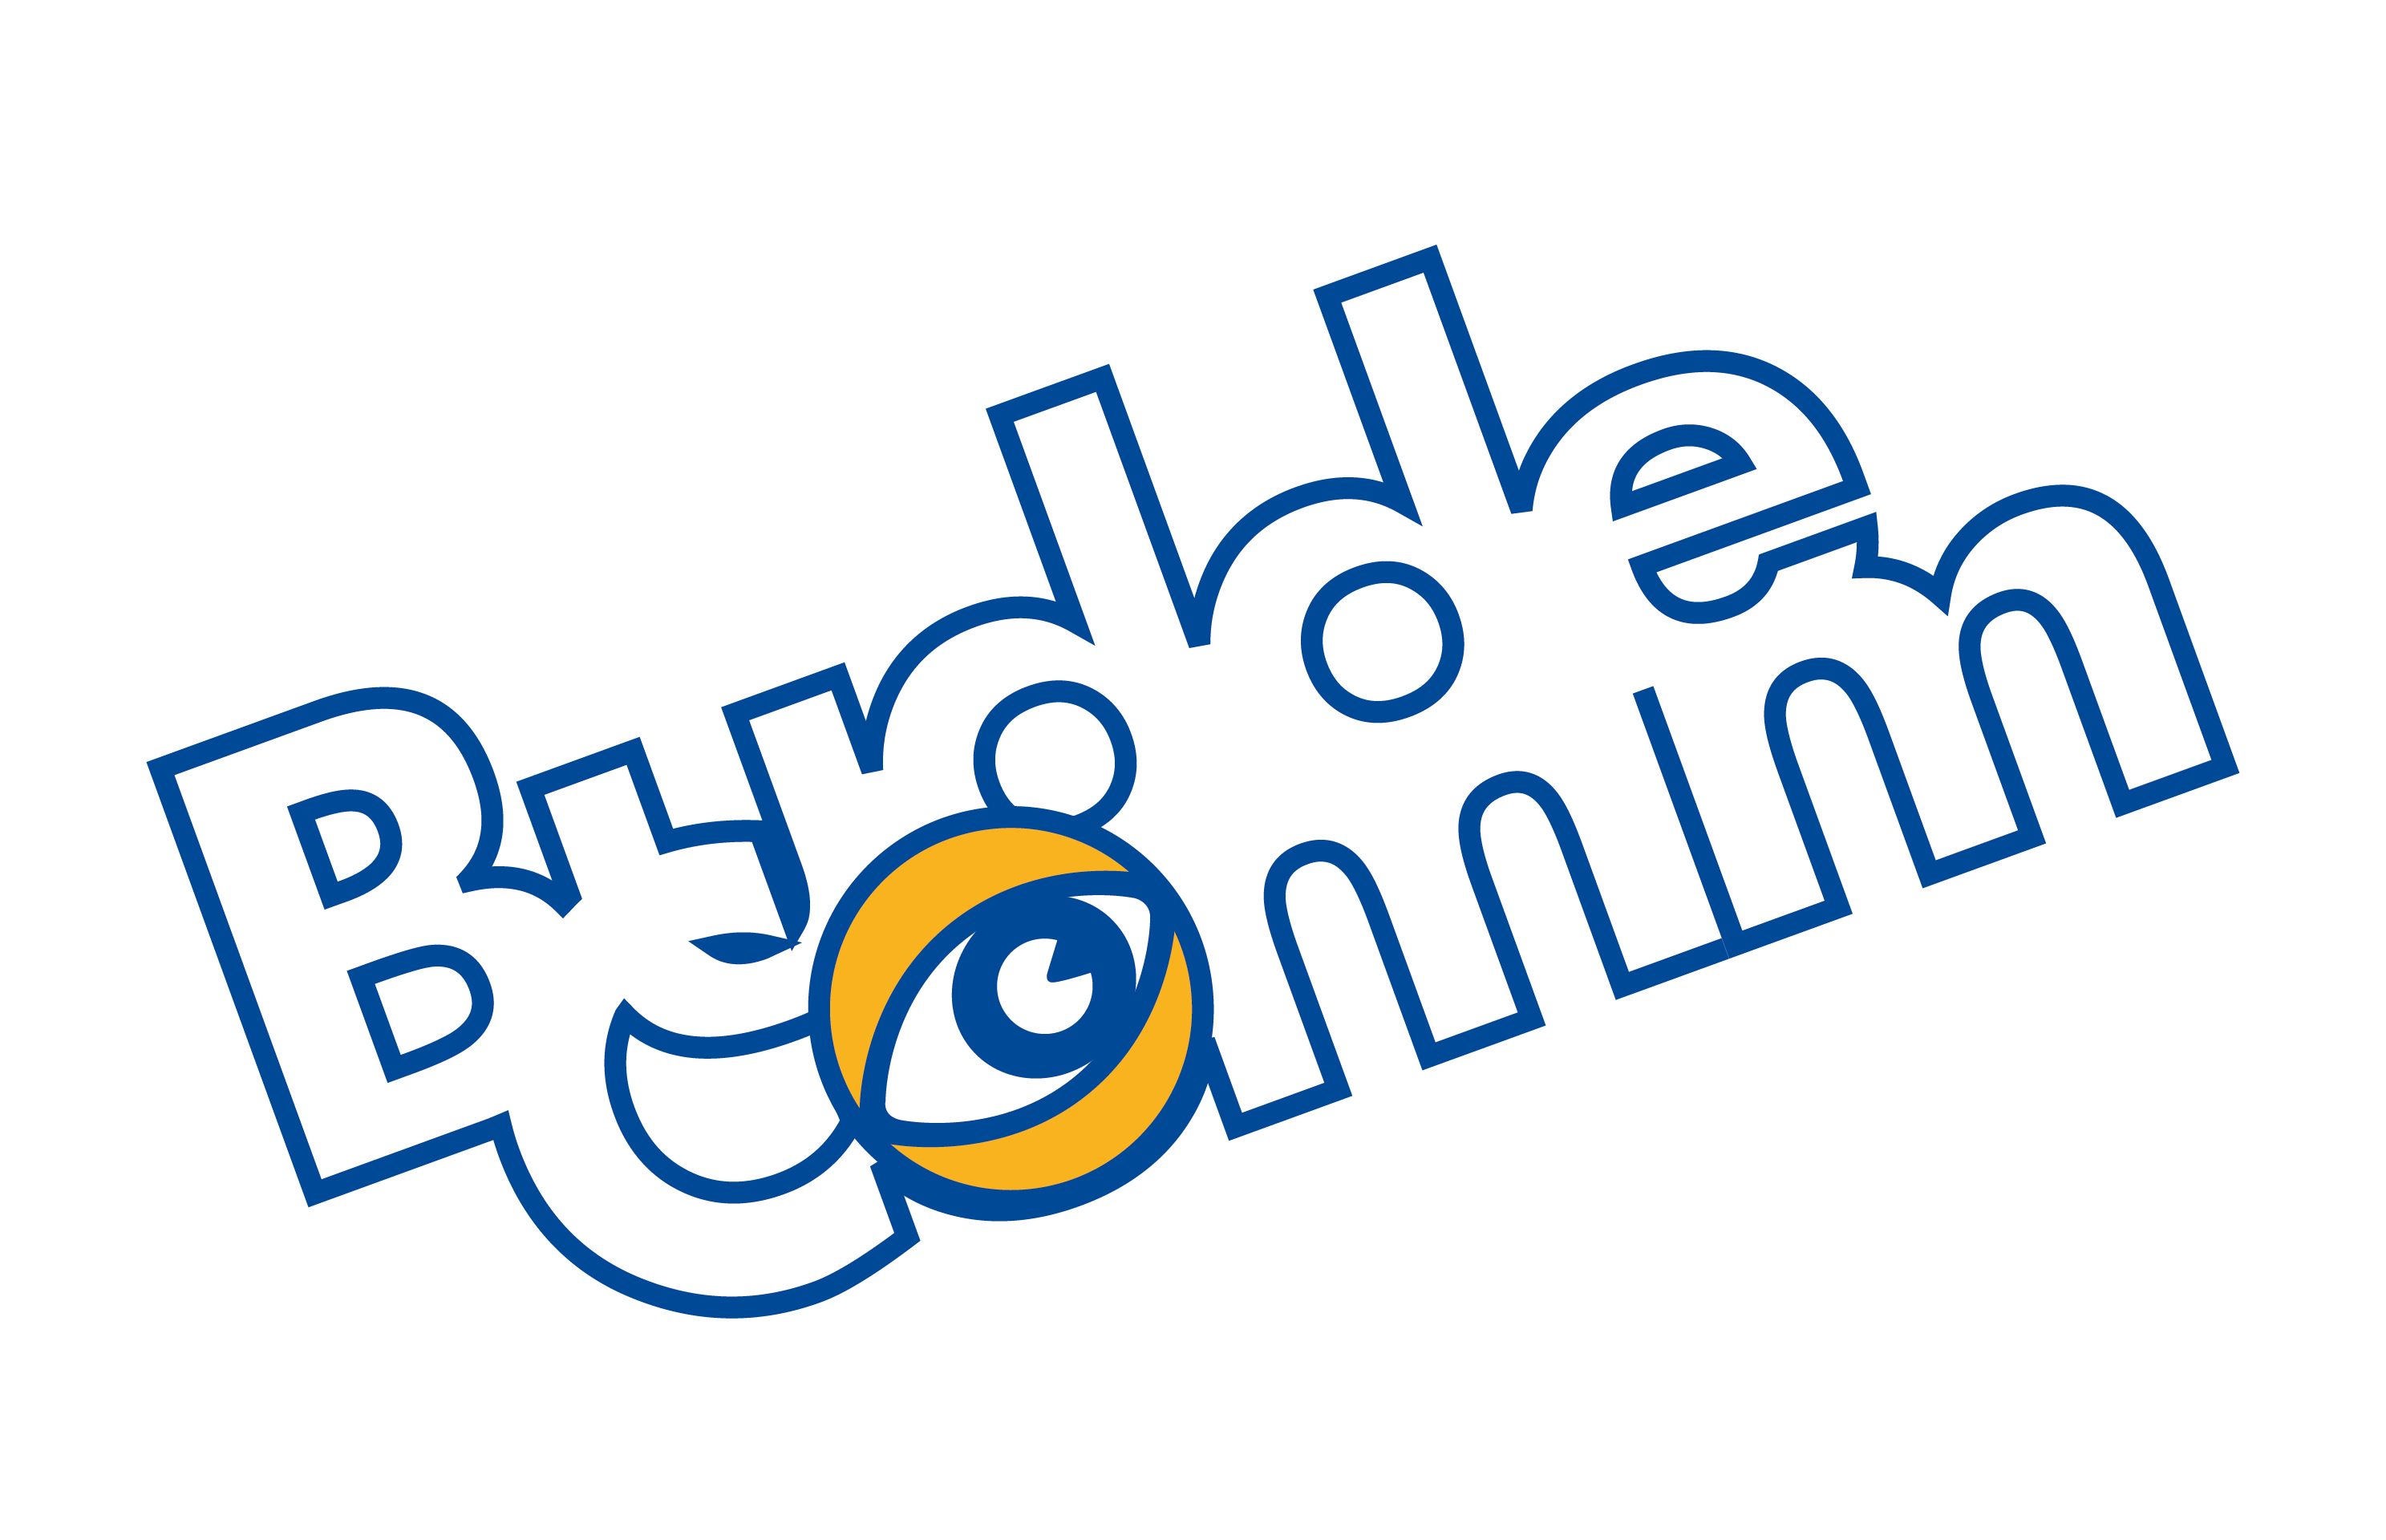 Budde_logo new.png